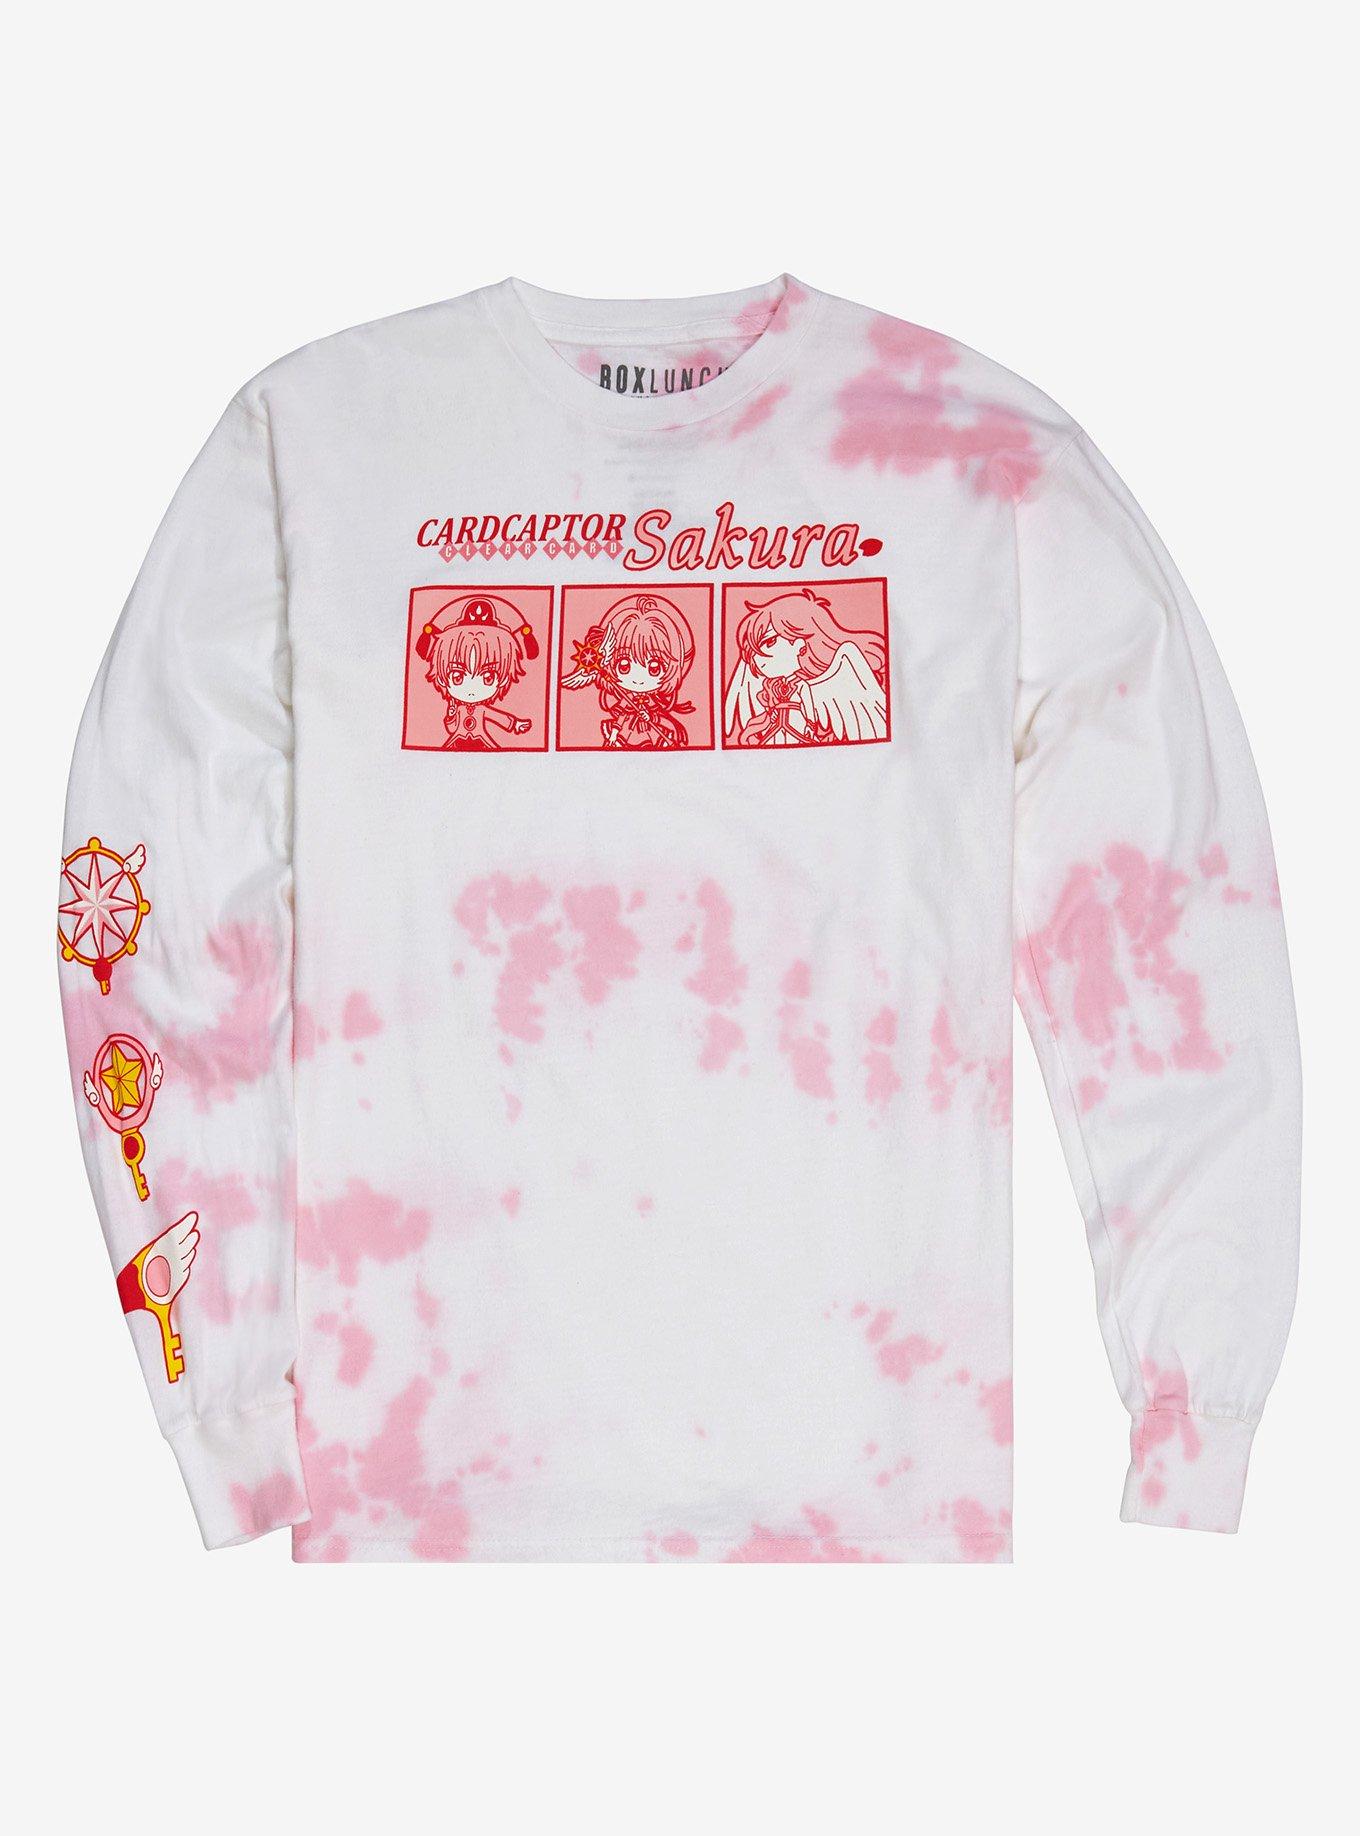 Cardcaptor Sakura Chibi Character Panels Tie-Dye Long Sleeve T-Shirt ...